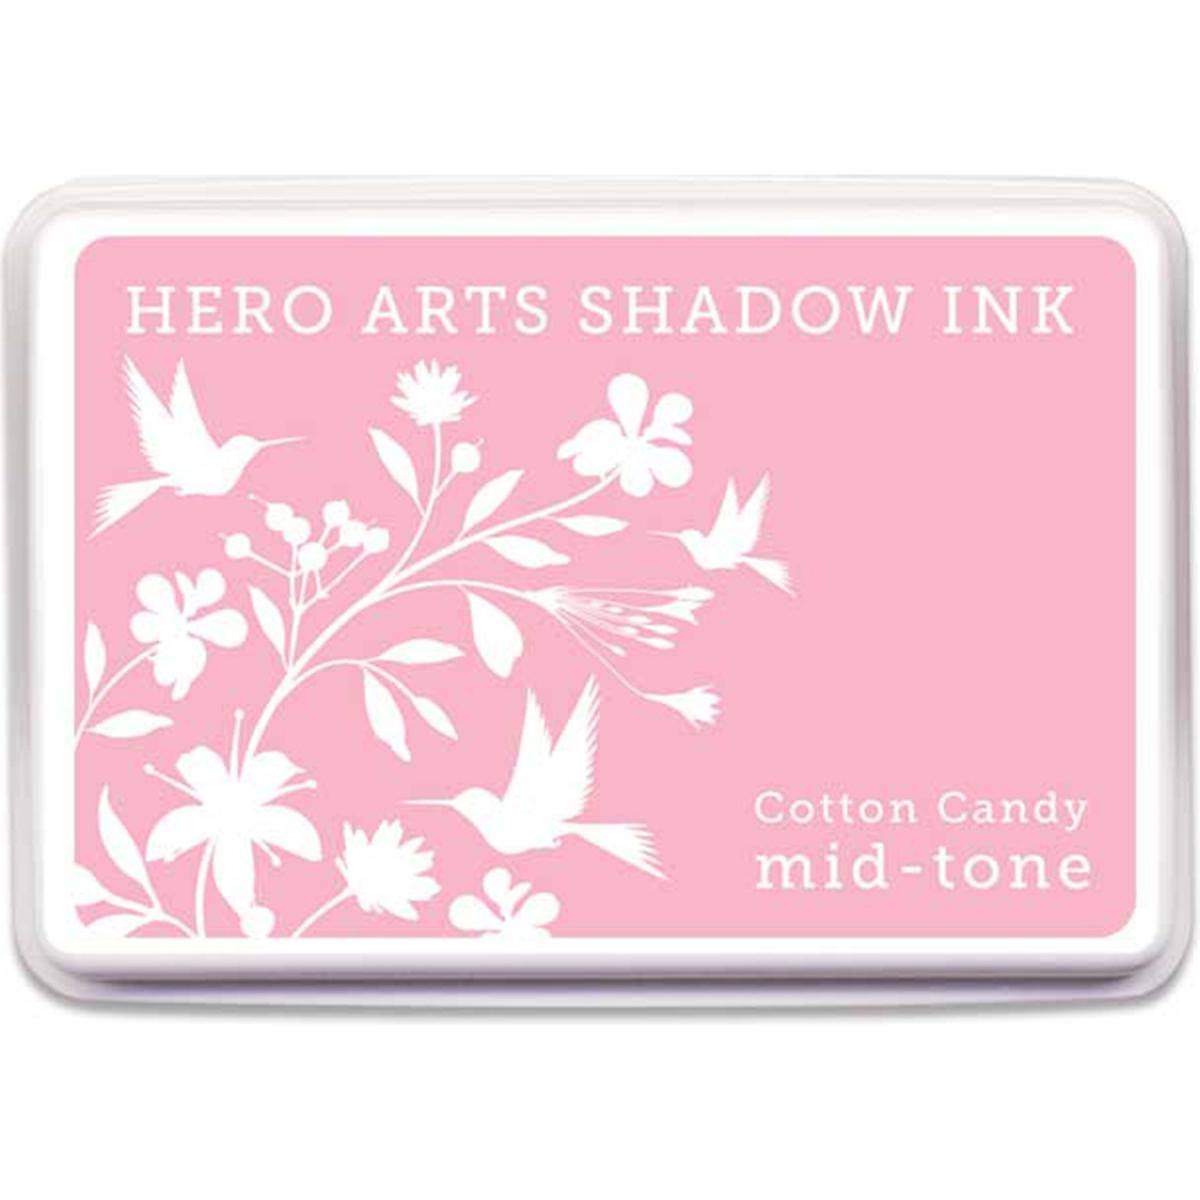 Hero Arts Midtone Shadow Ink Pad - Cotton Candy